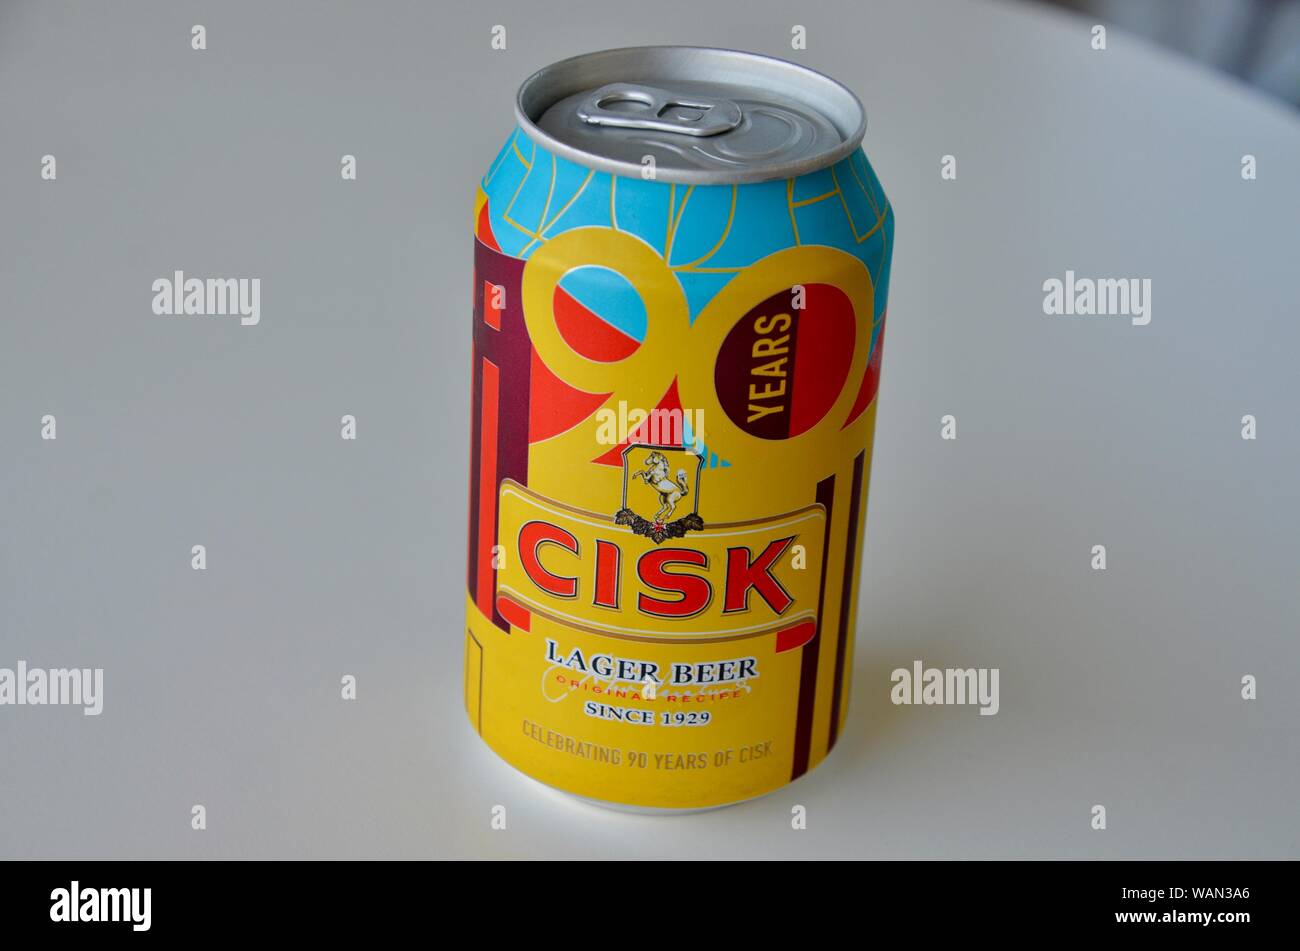 a can of maltese lager beer cisk brand malta Stock Photo